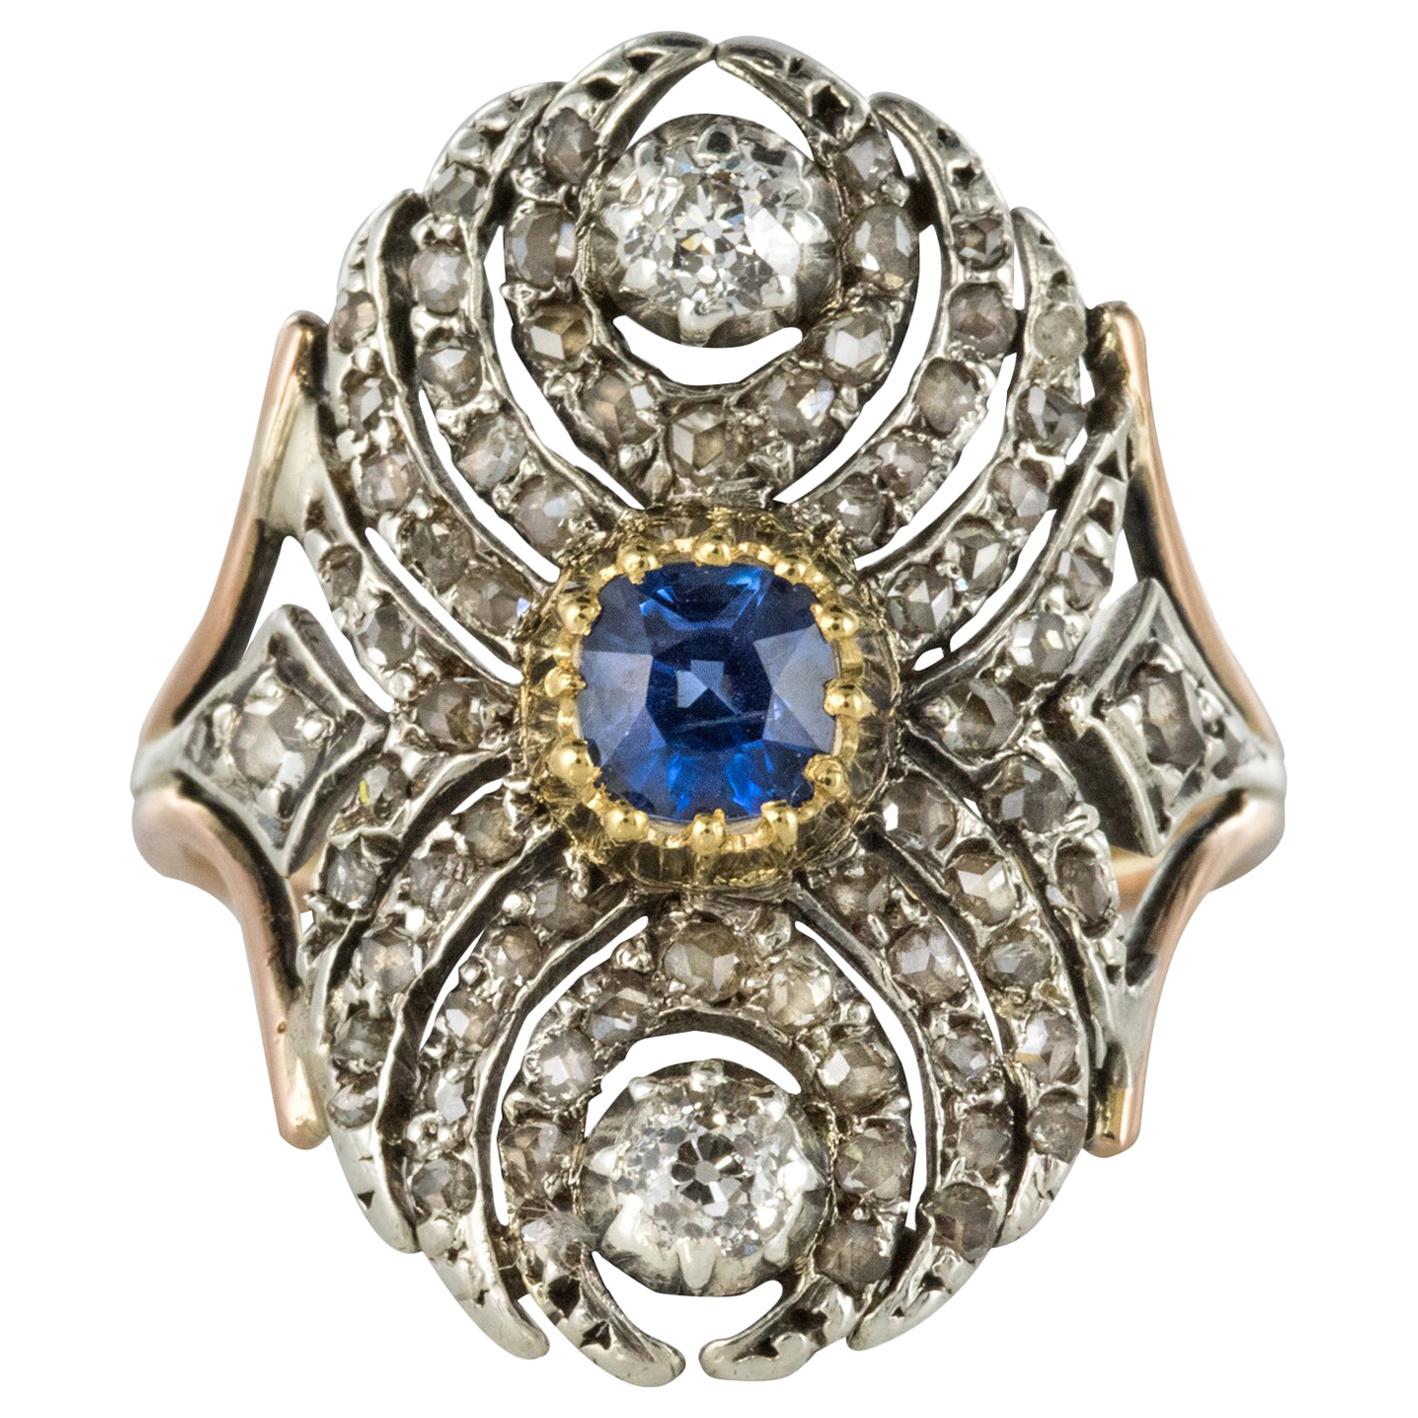 French 19th Century 18 Karat Yellow Gold Silver Sapphire Diamond Ring